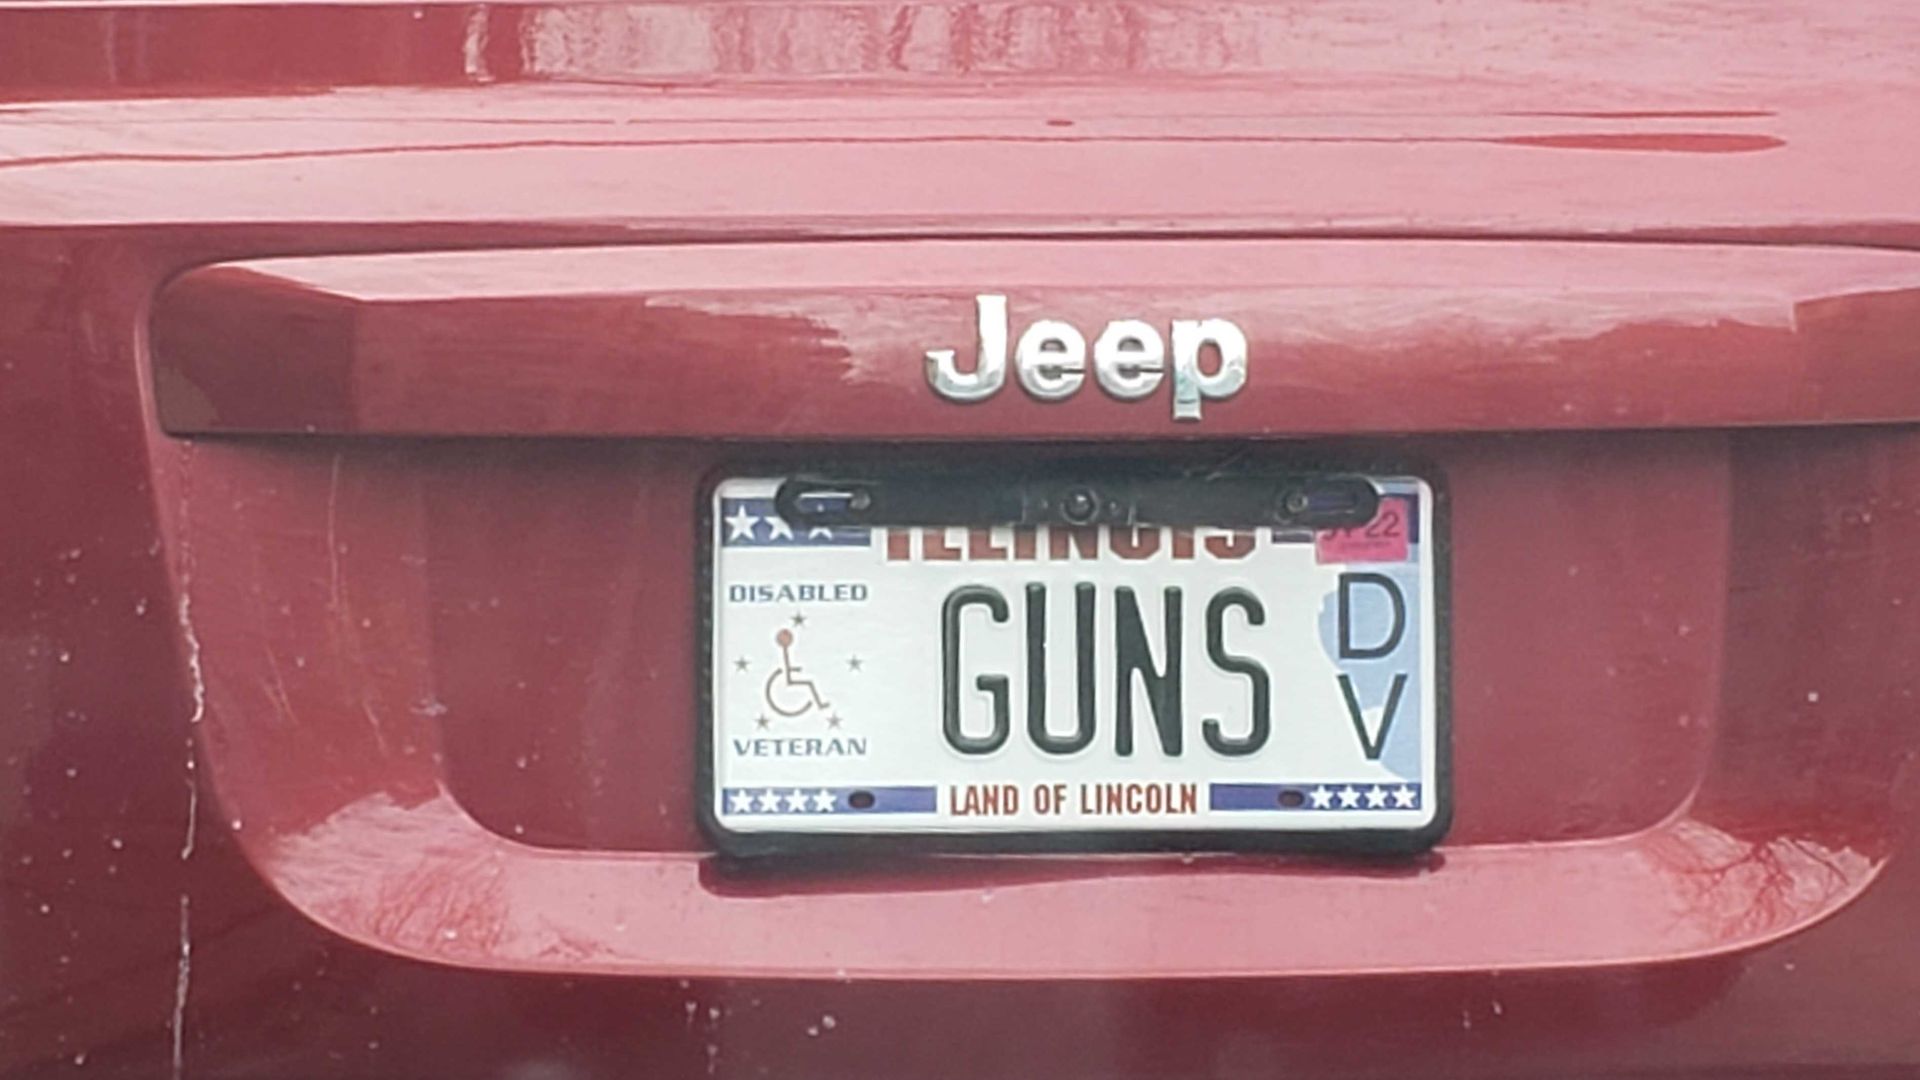 License plate that says GUNS